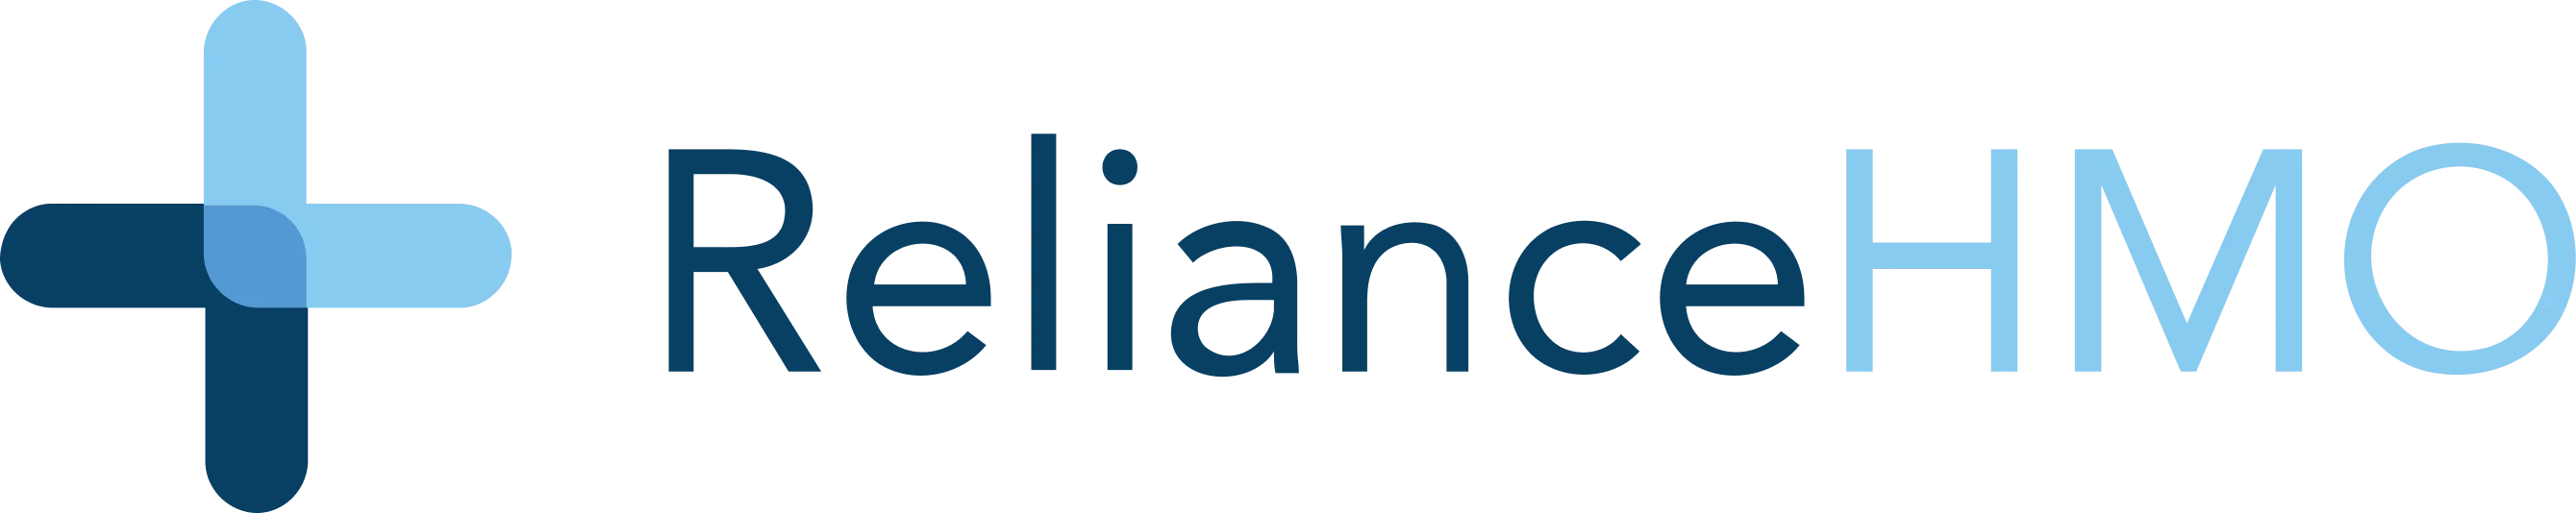 Reliance HMO Logo